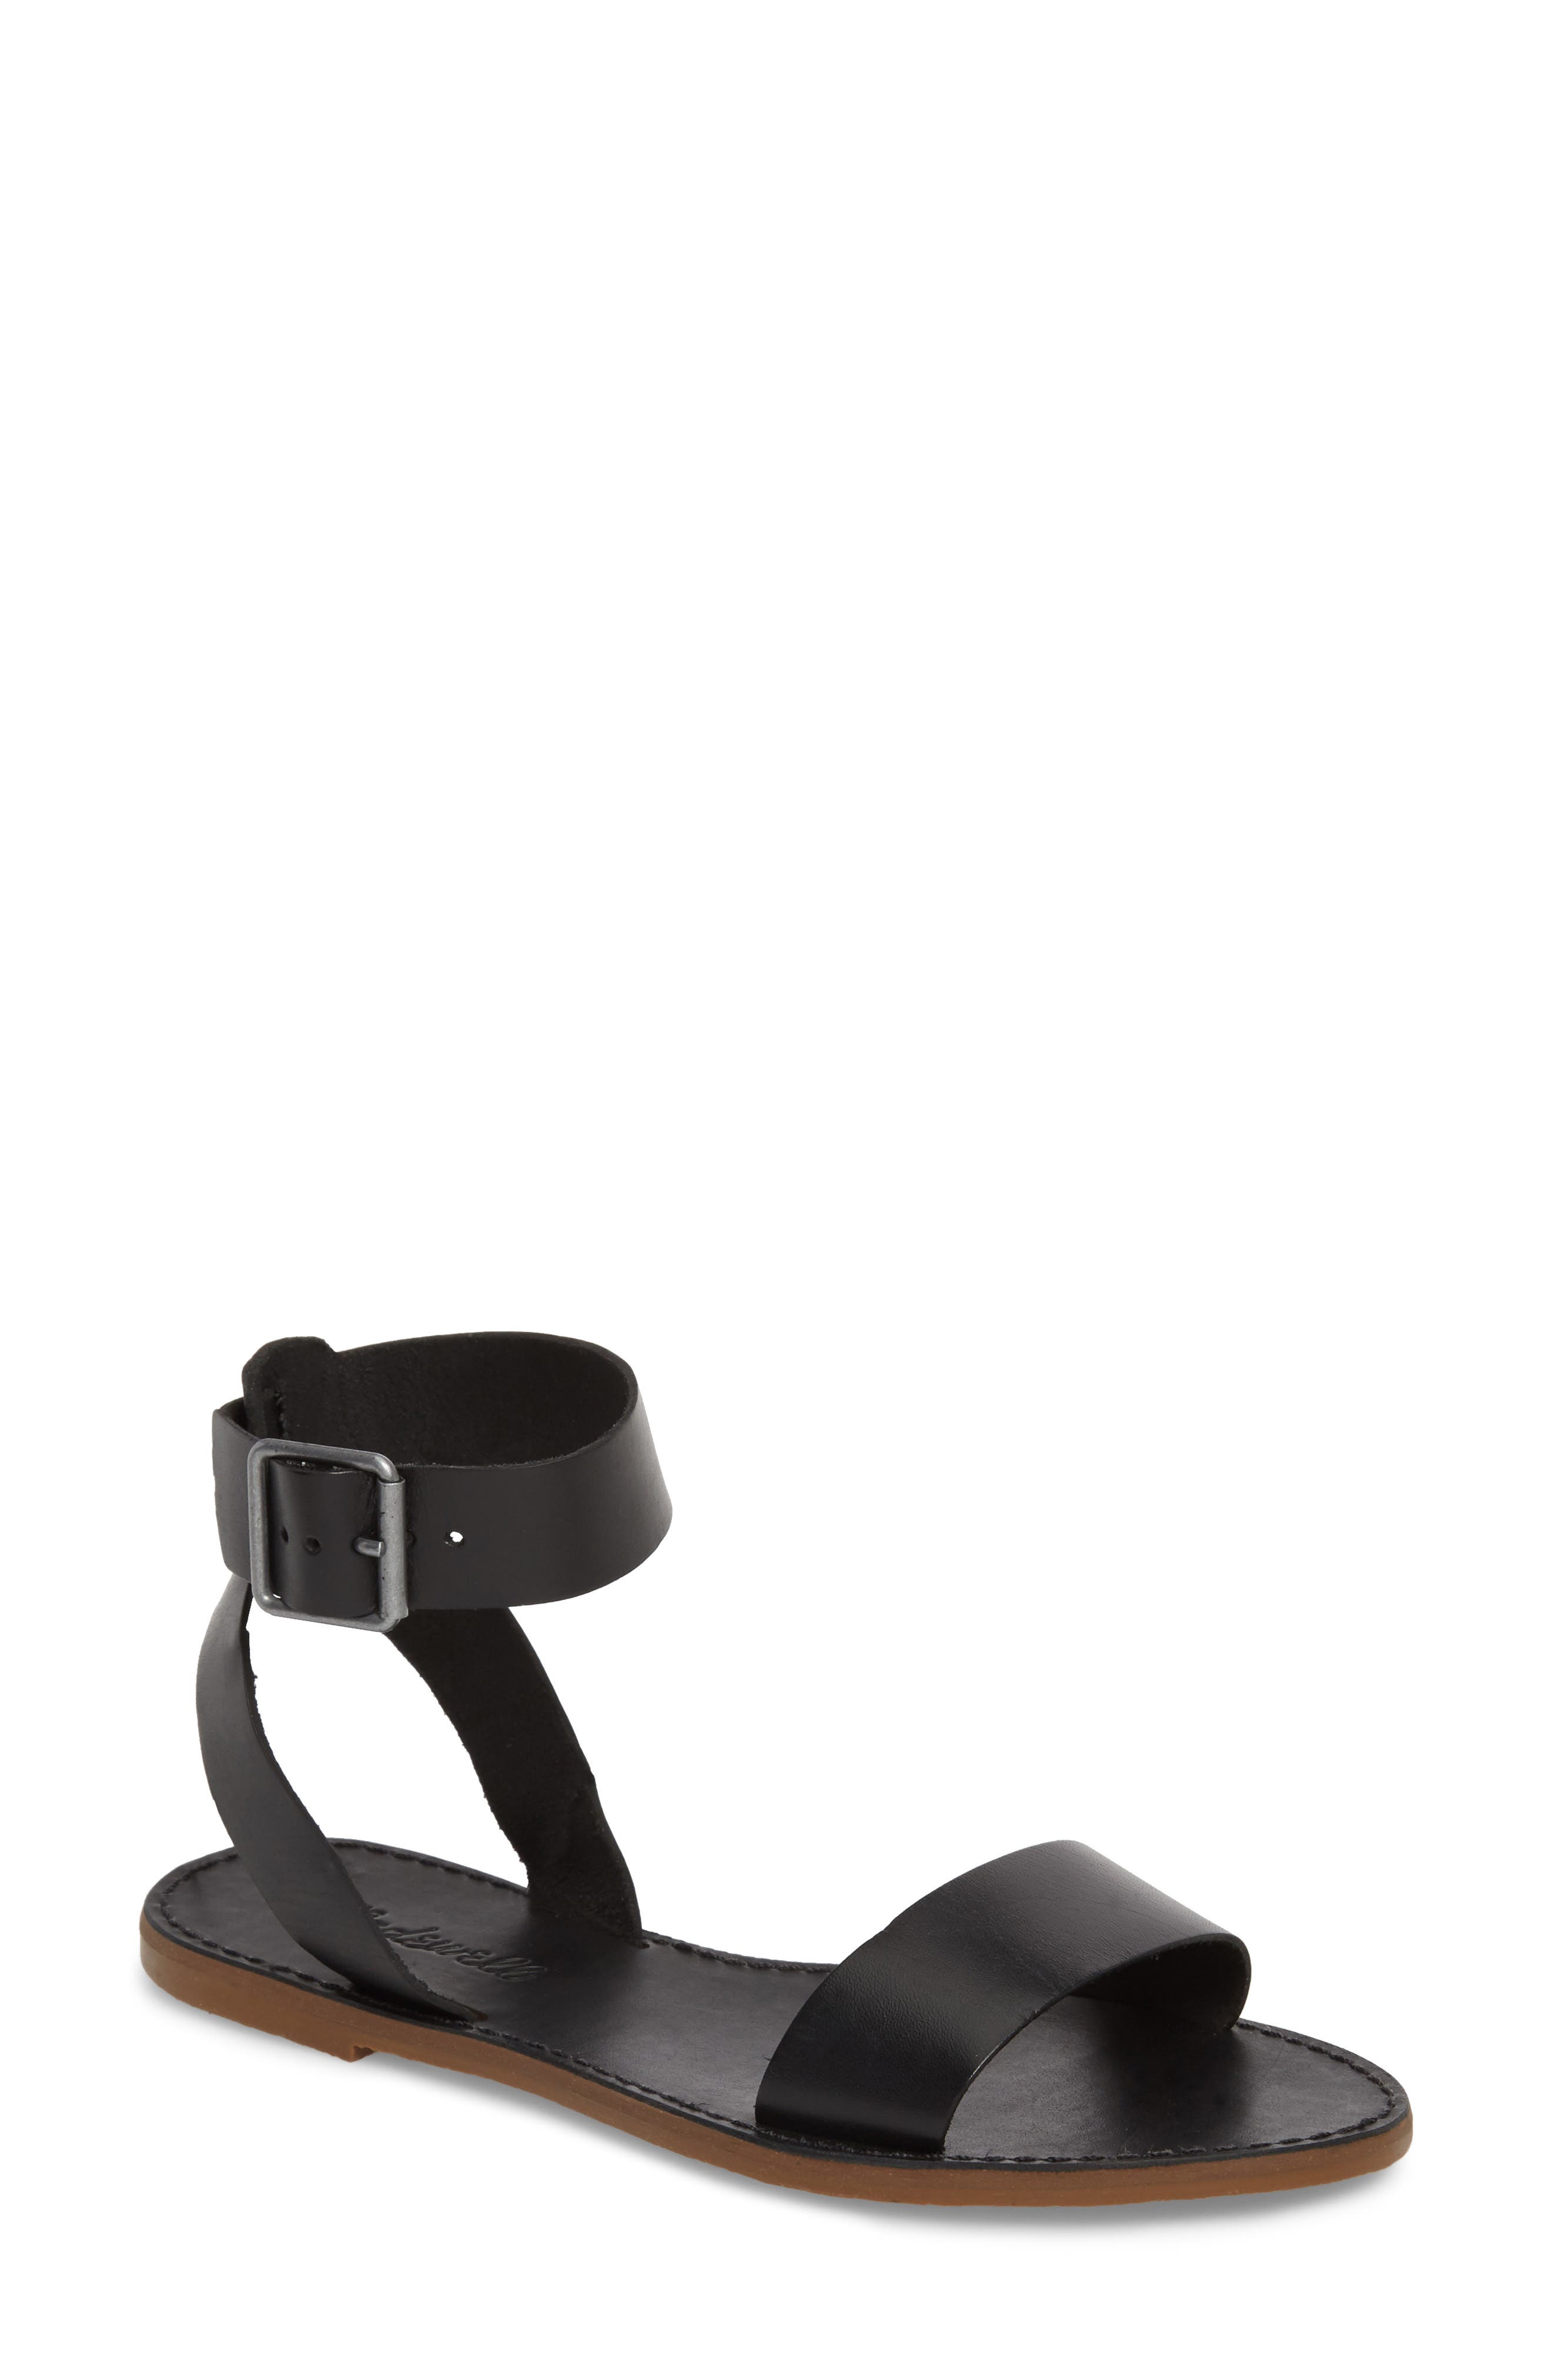 Madewell The Boardwalk Ankle Strap Sandal In True Black Leather | ModeSens